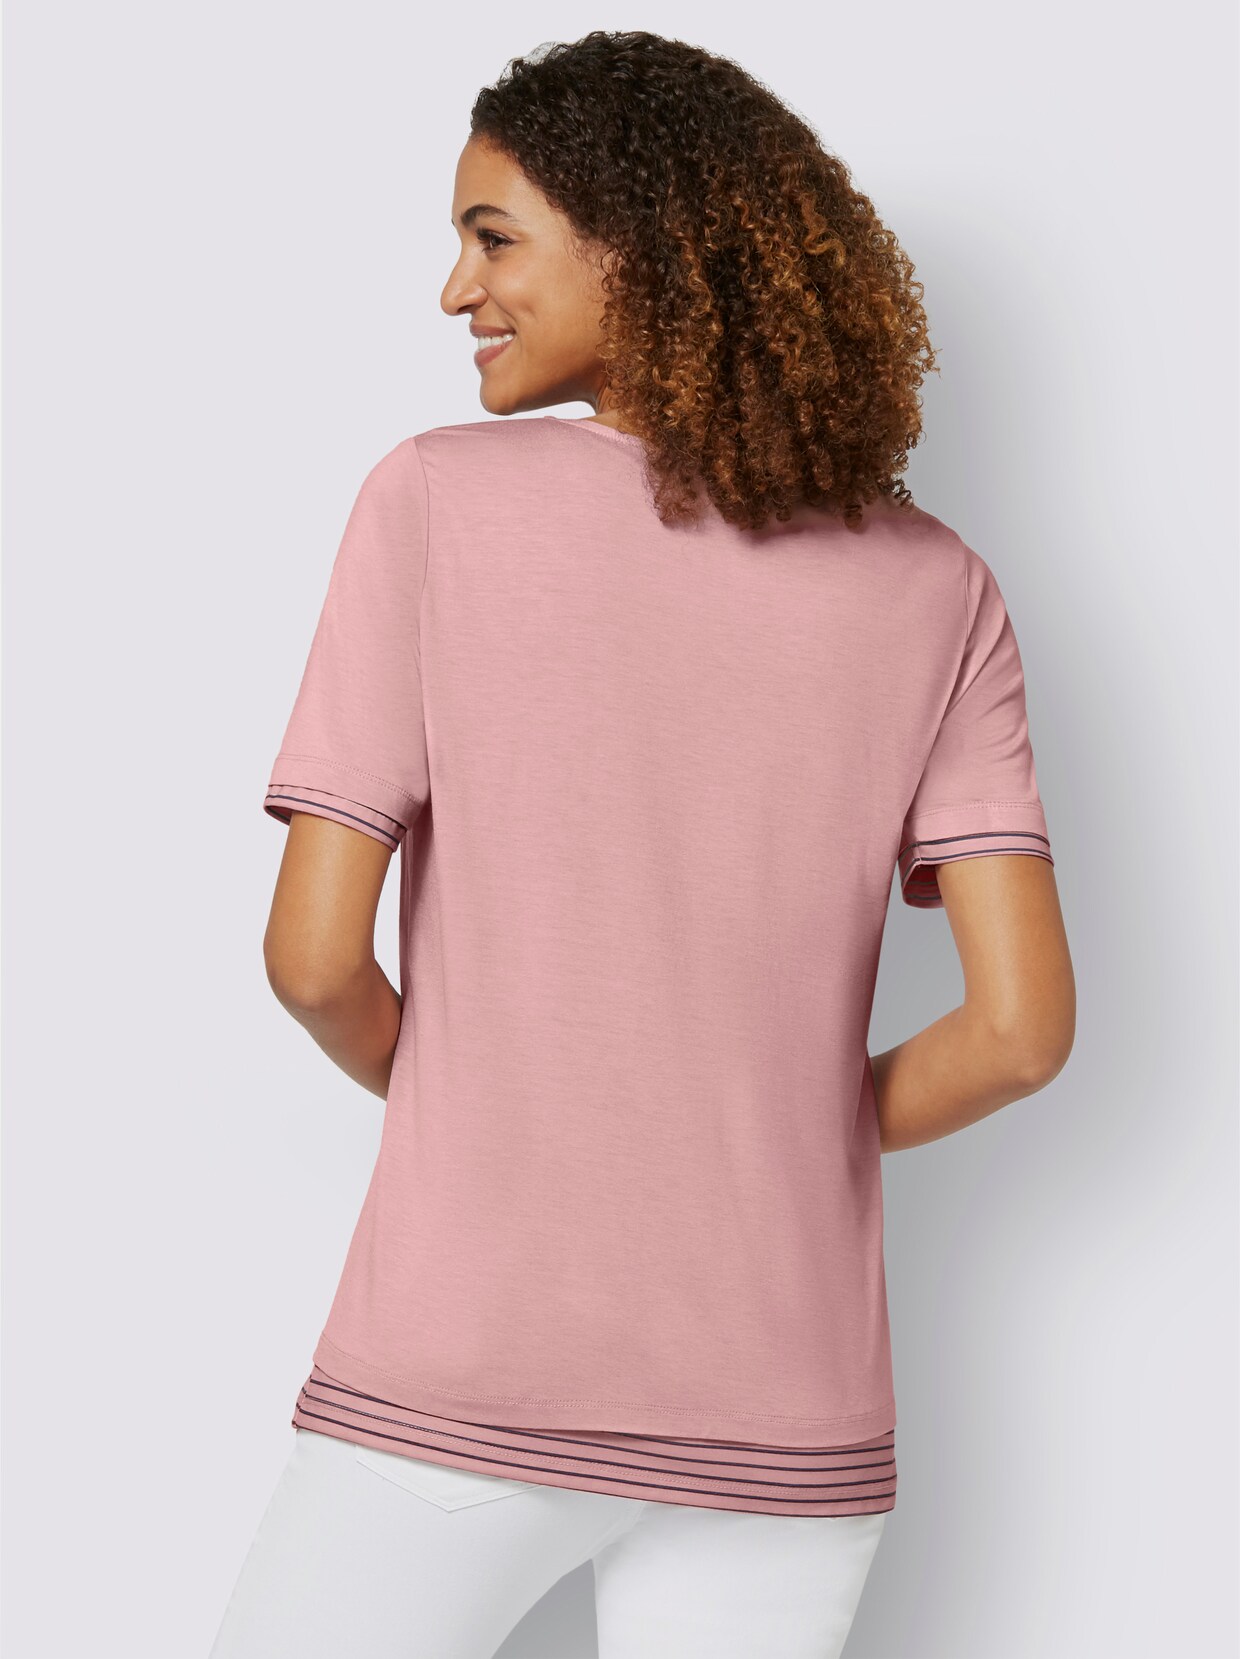 2-in-1-Shirt - rosenquarz